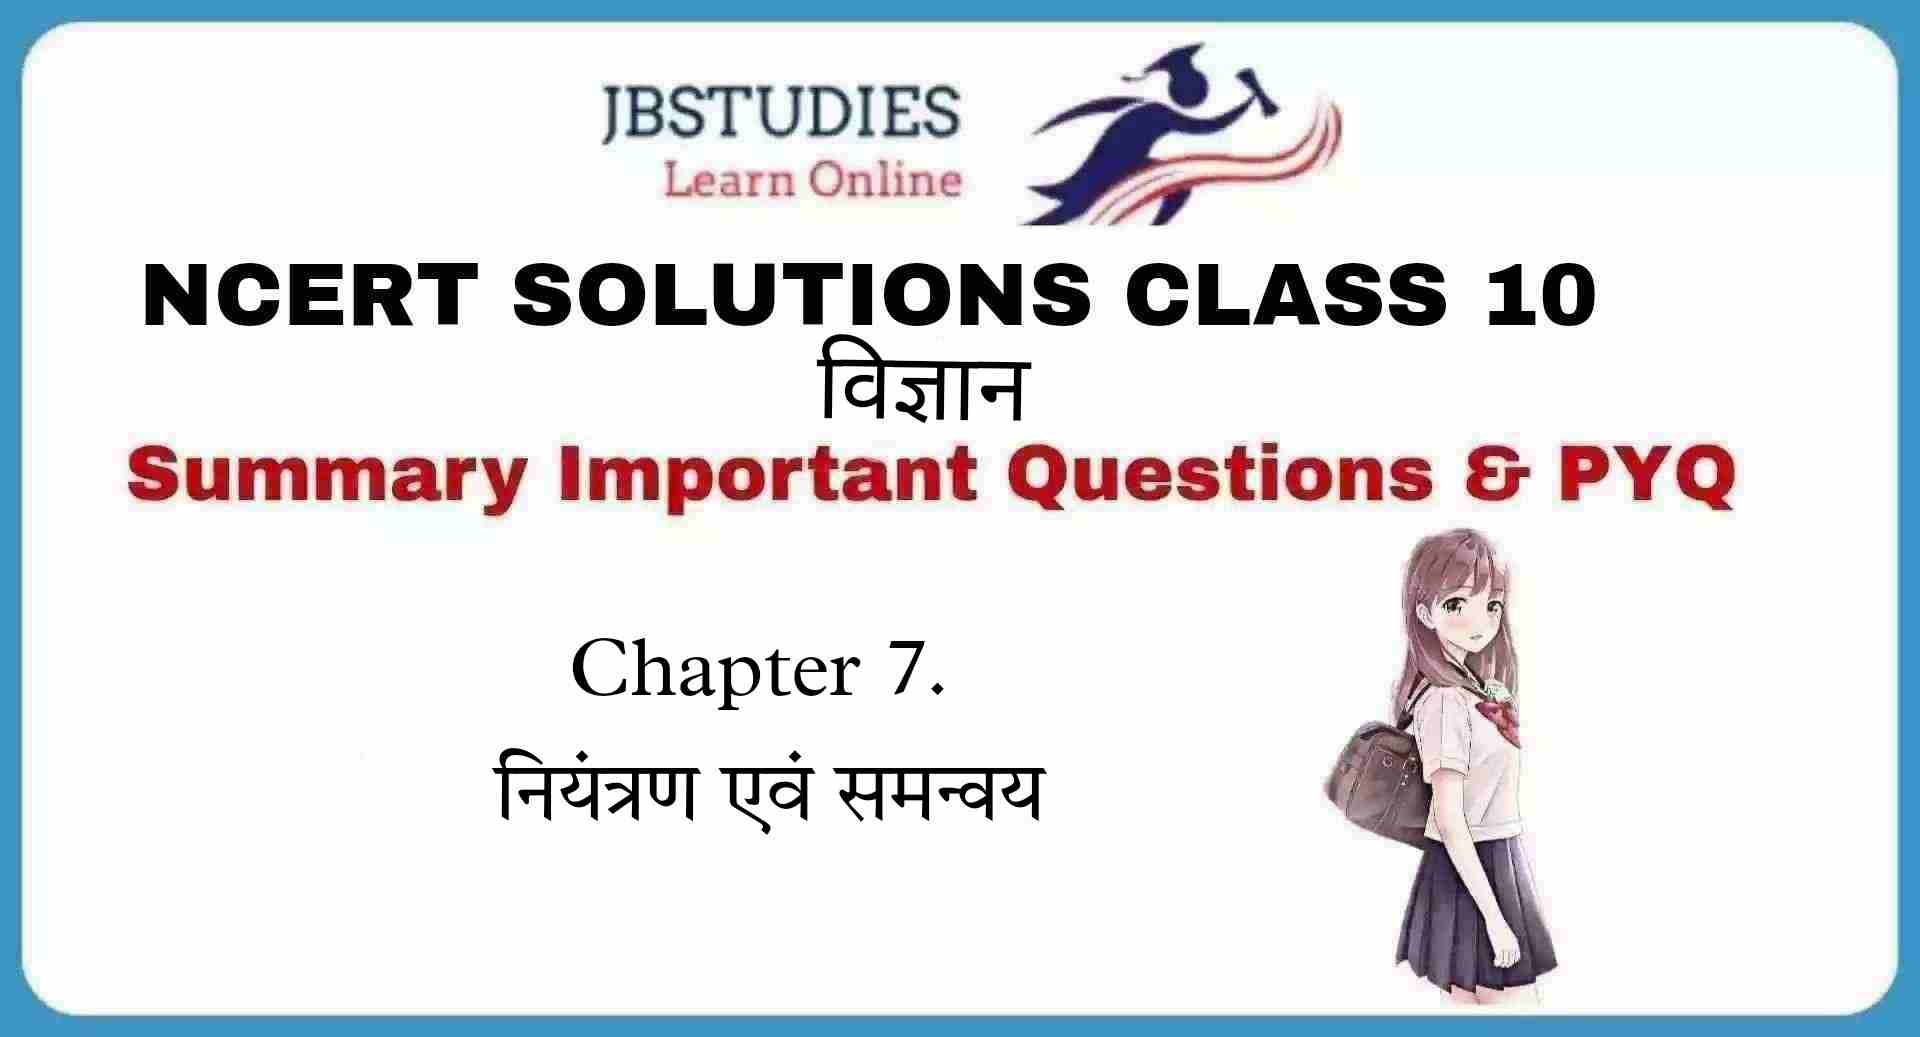 Solutions Class 10 विज्ञान Chapter-7 (नियंत्रण एवं समन्वय)